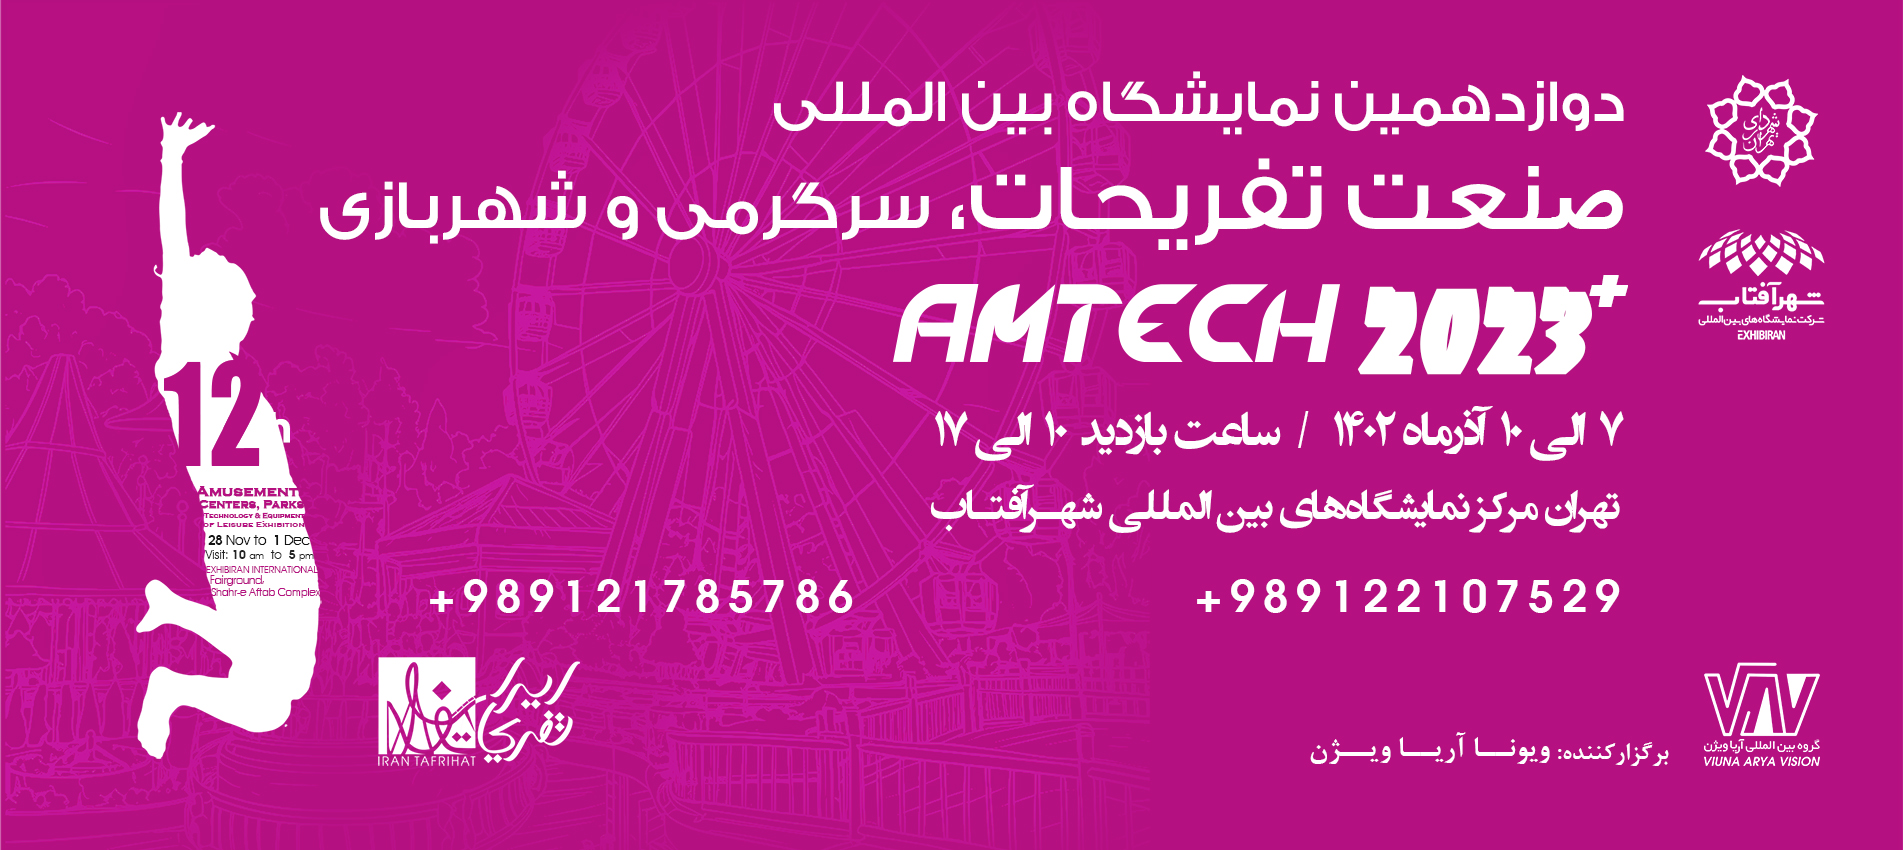 AMTECH EXPO